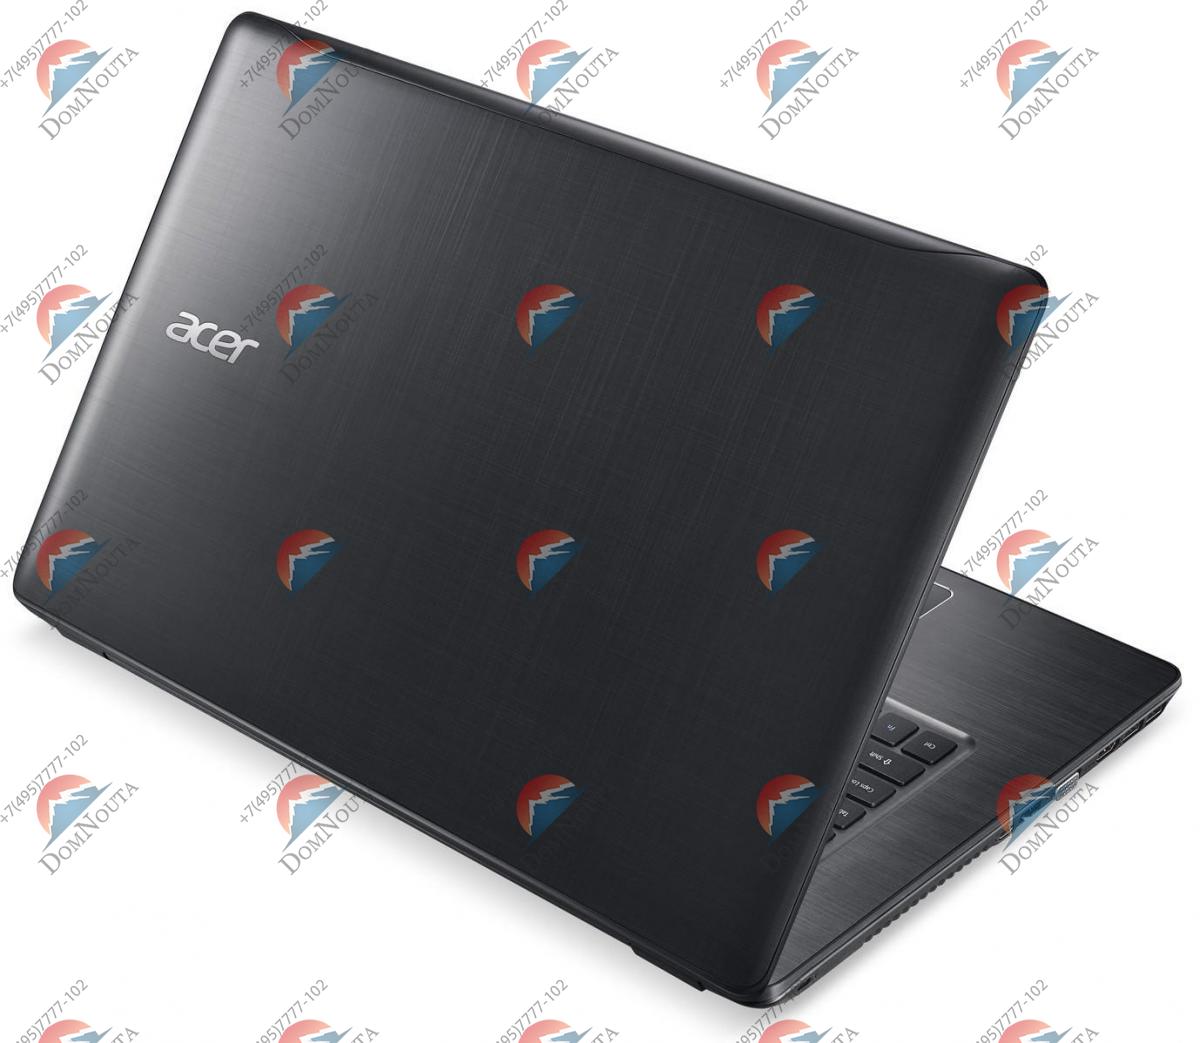 Ноутбук Acer F5-771G-79TJ F5